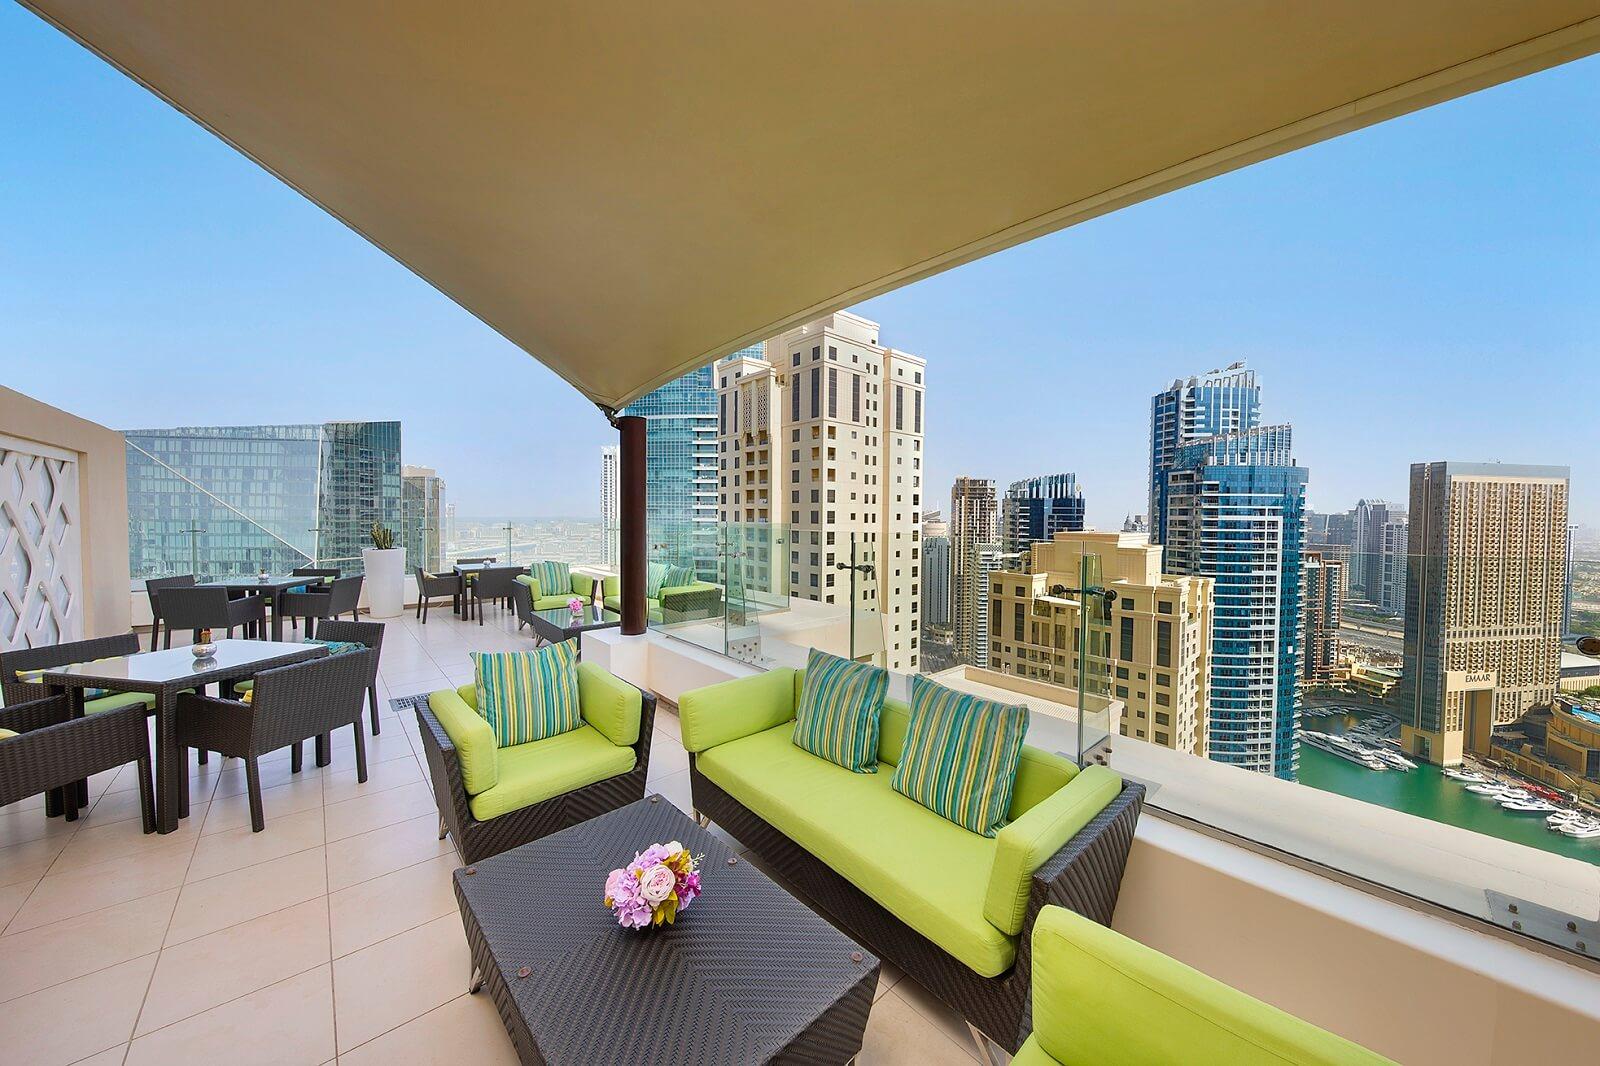 Hilton Dubai The Walk Club Lounge Outdoor Terrace